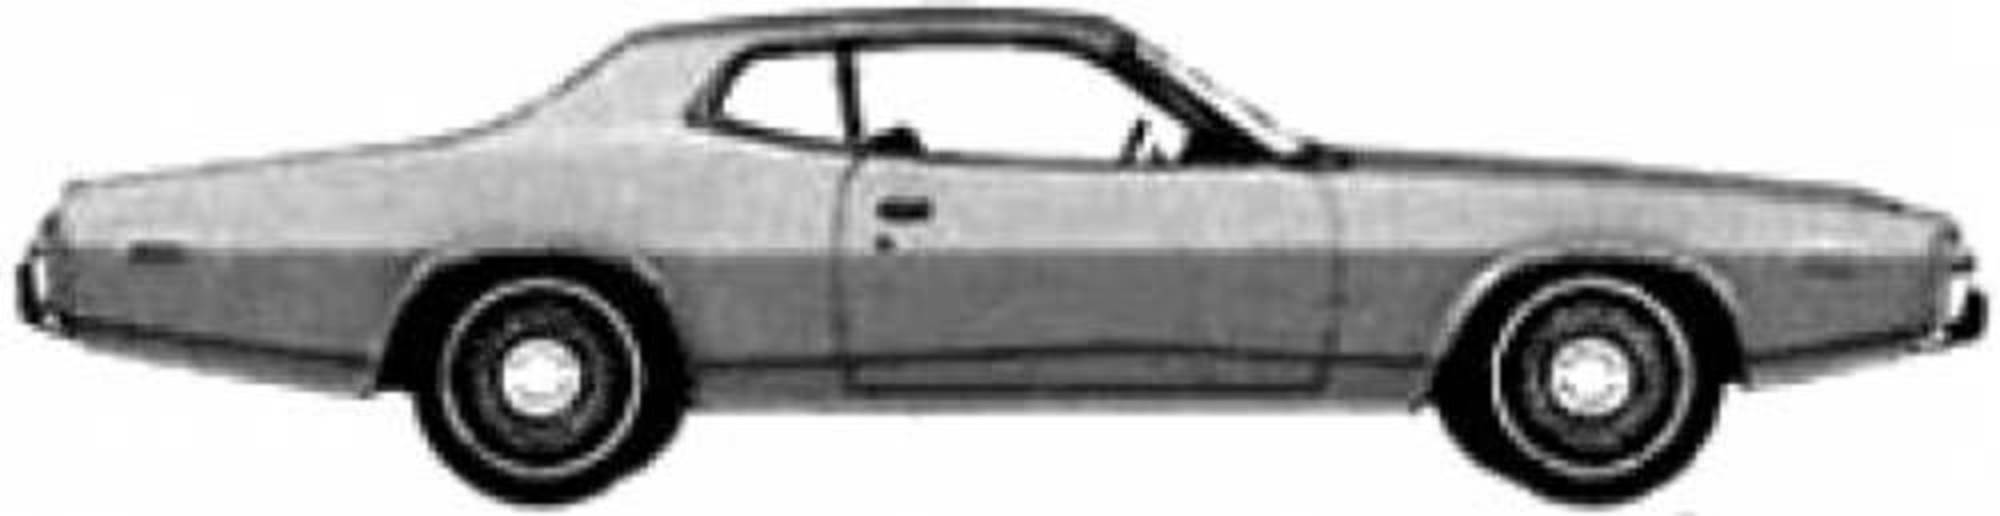 Dodge Charger Hardtop (1974) Original image dimensions: 528 x 137px